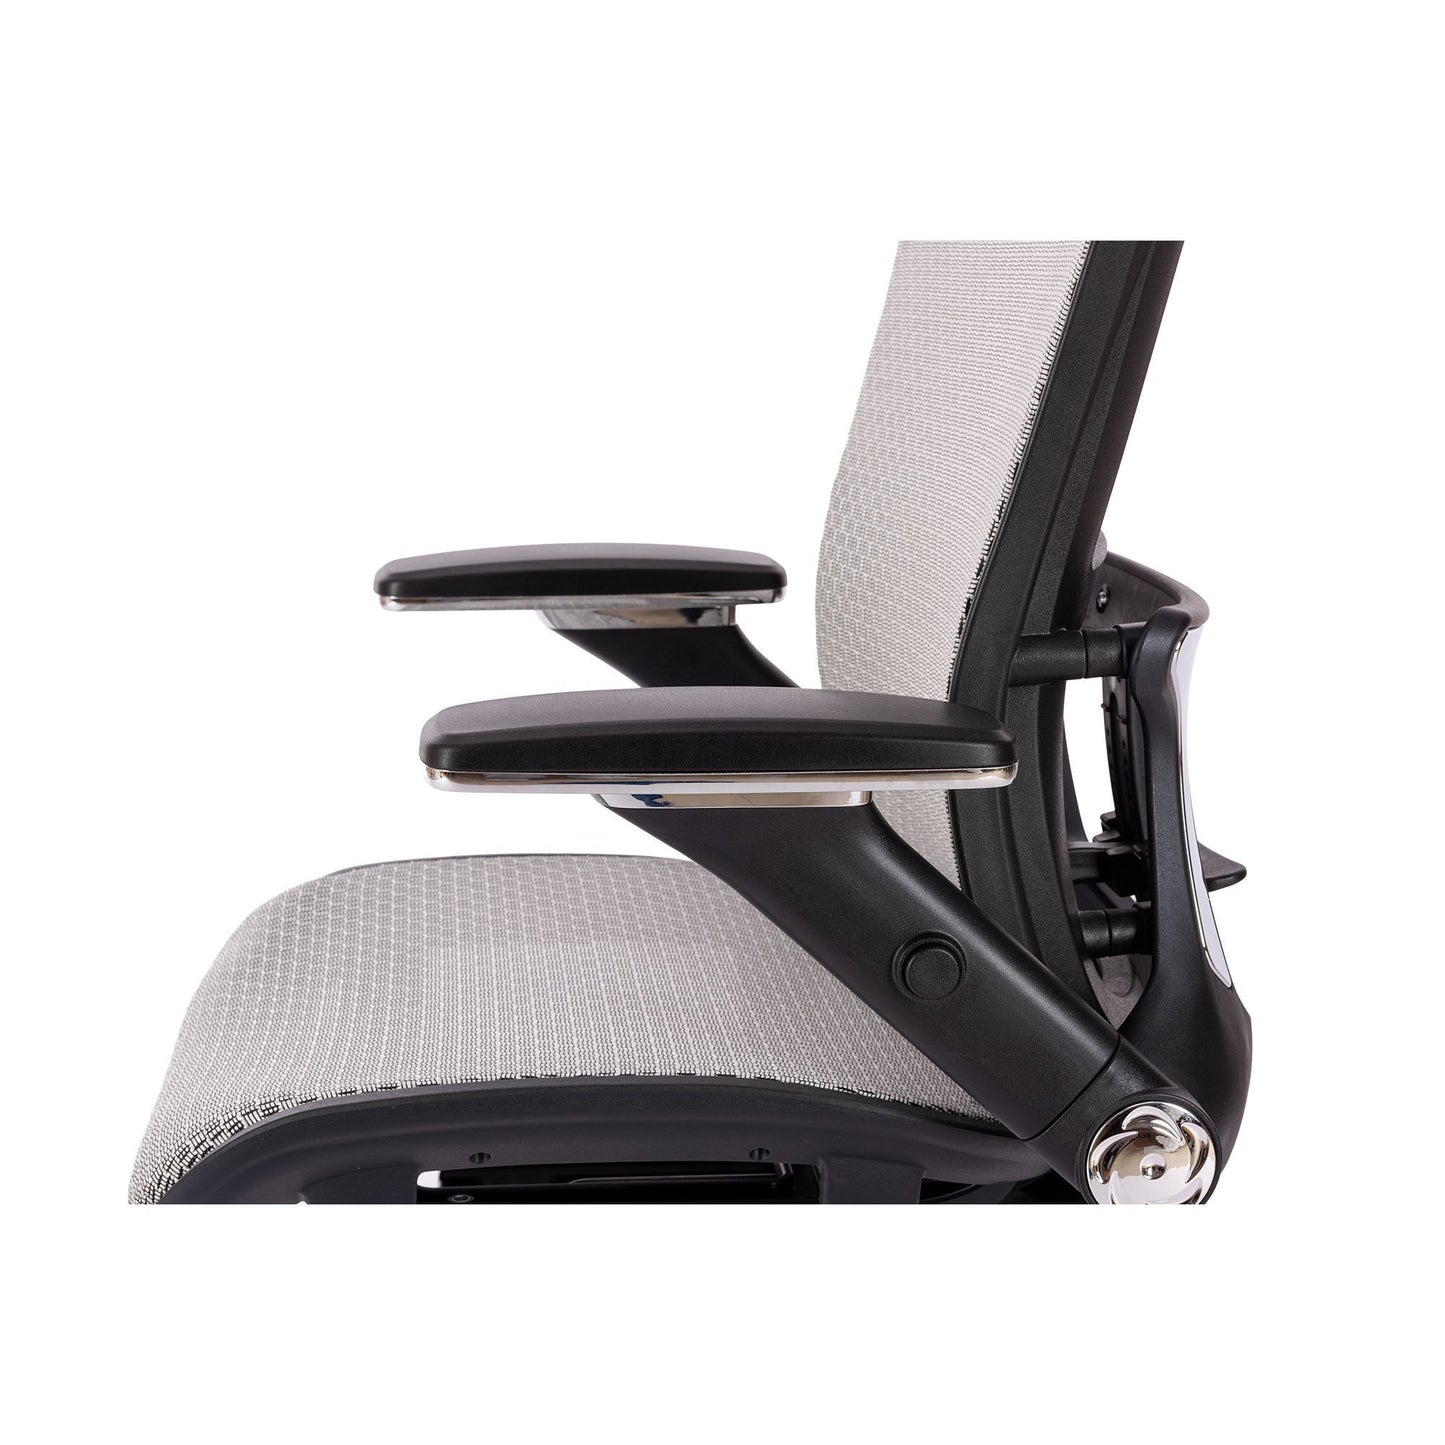 Ergona Grey Mesh Office Chair w/ Adjustable Headrest with Flip-Up Arms